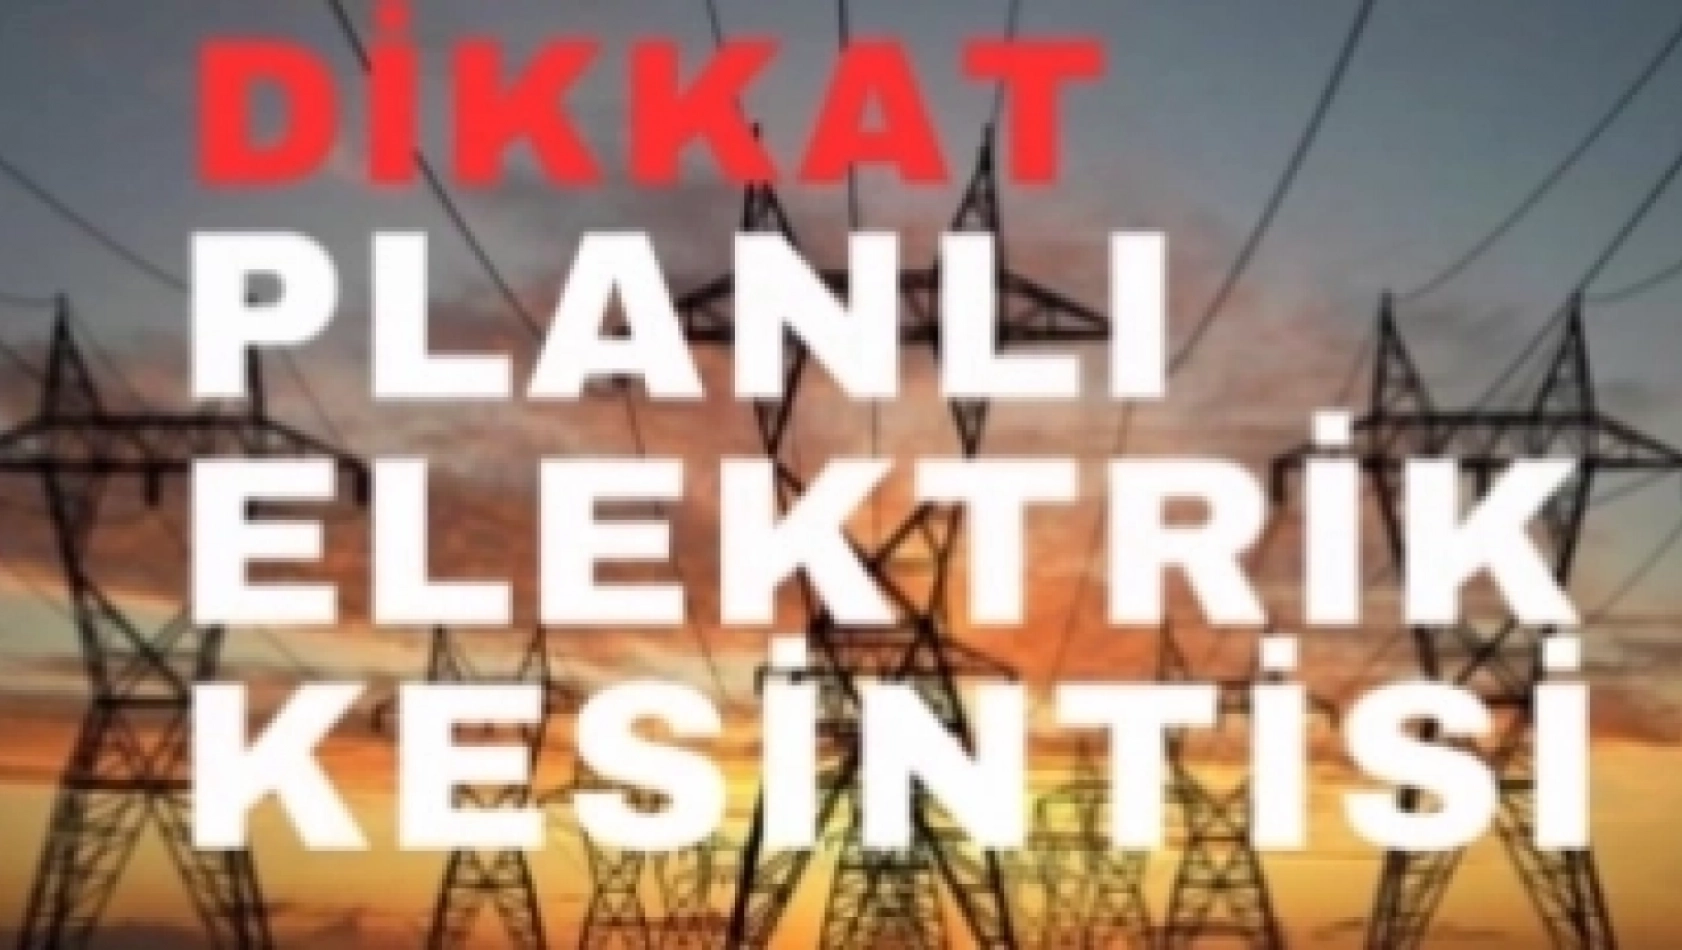 Malatya'da Planlı Elektrik Kesintisi